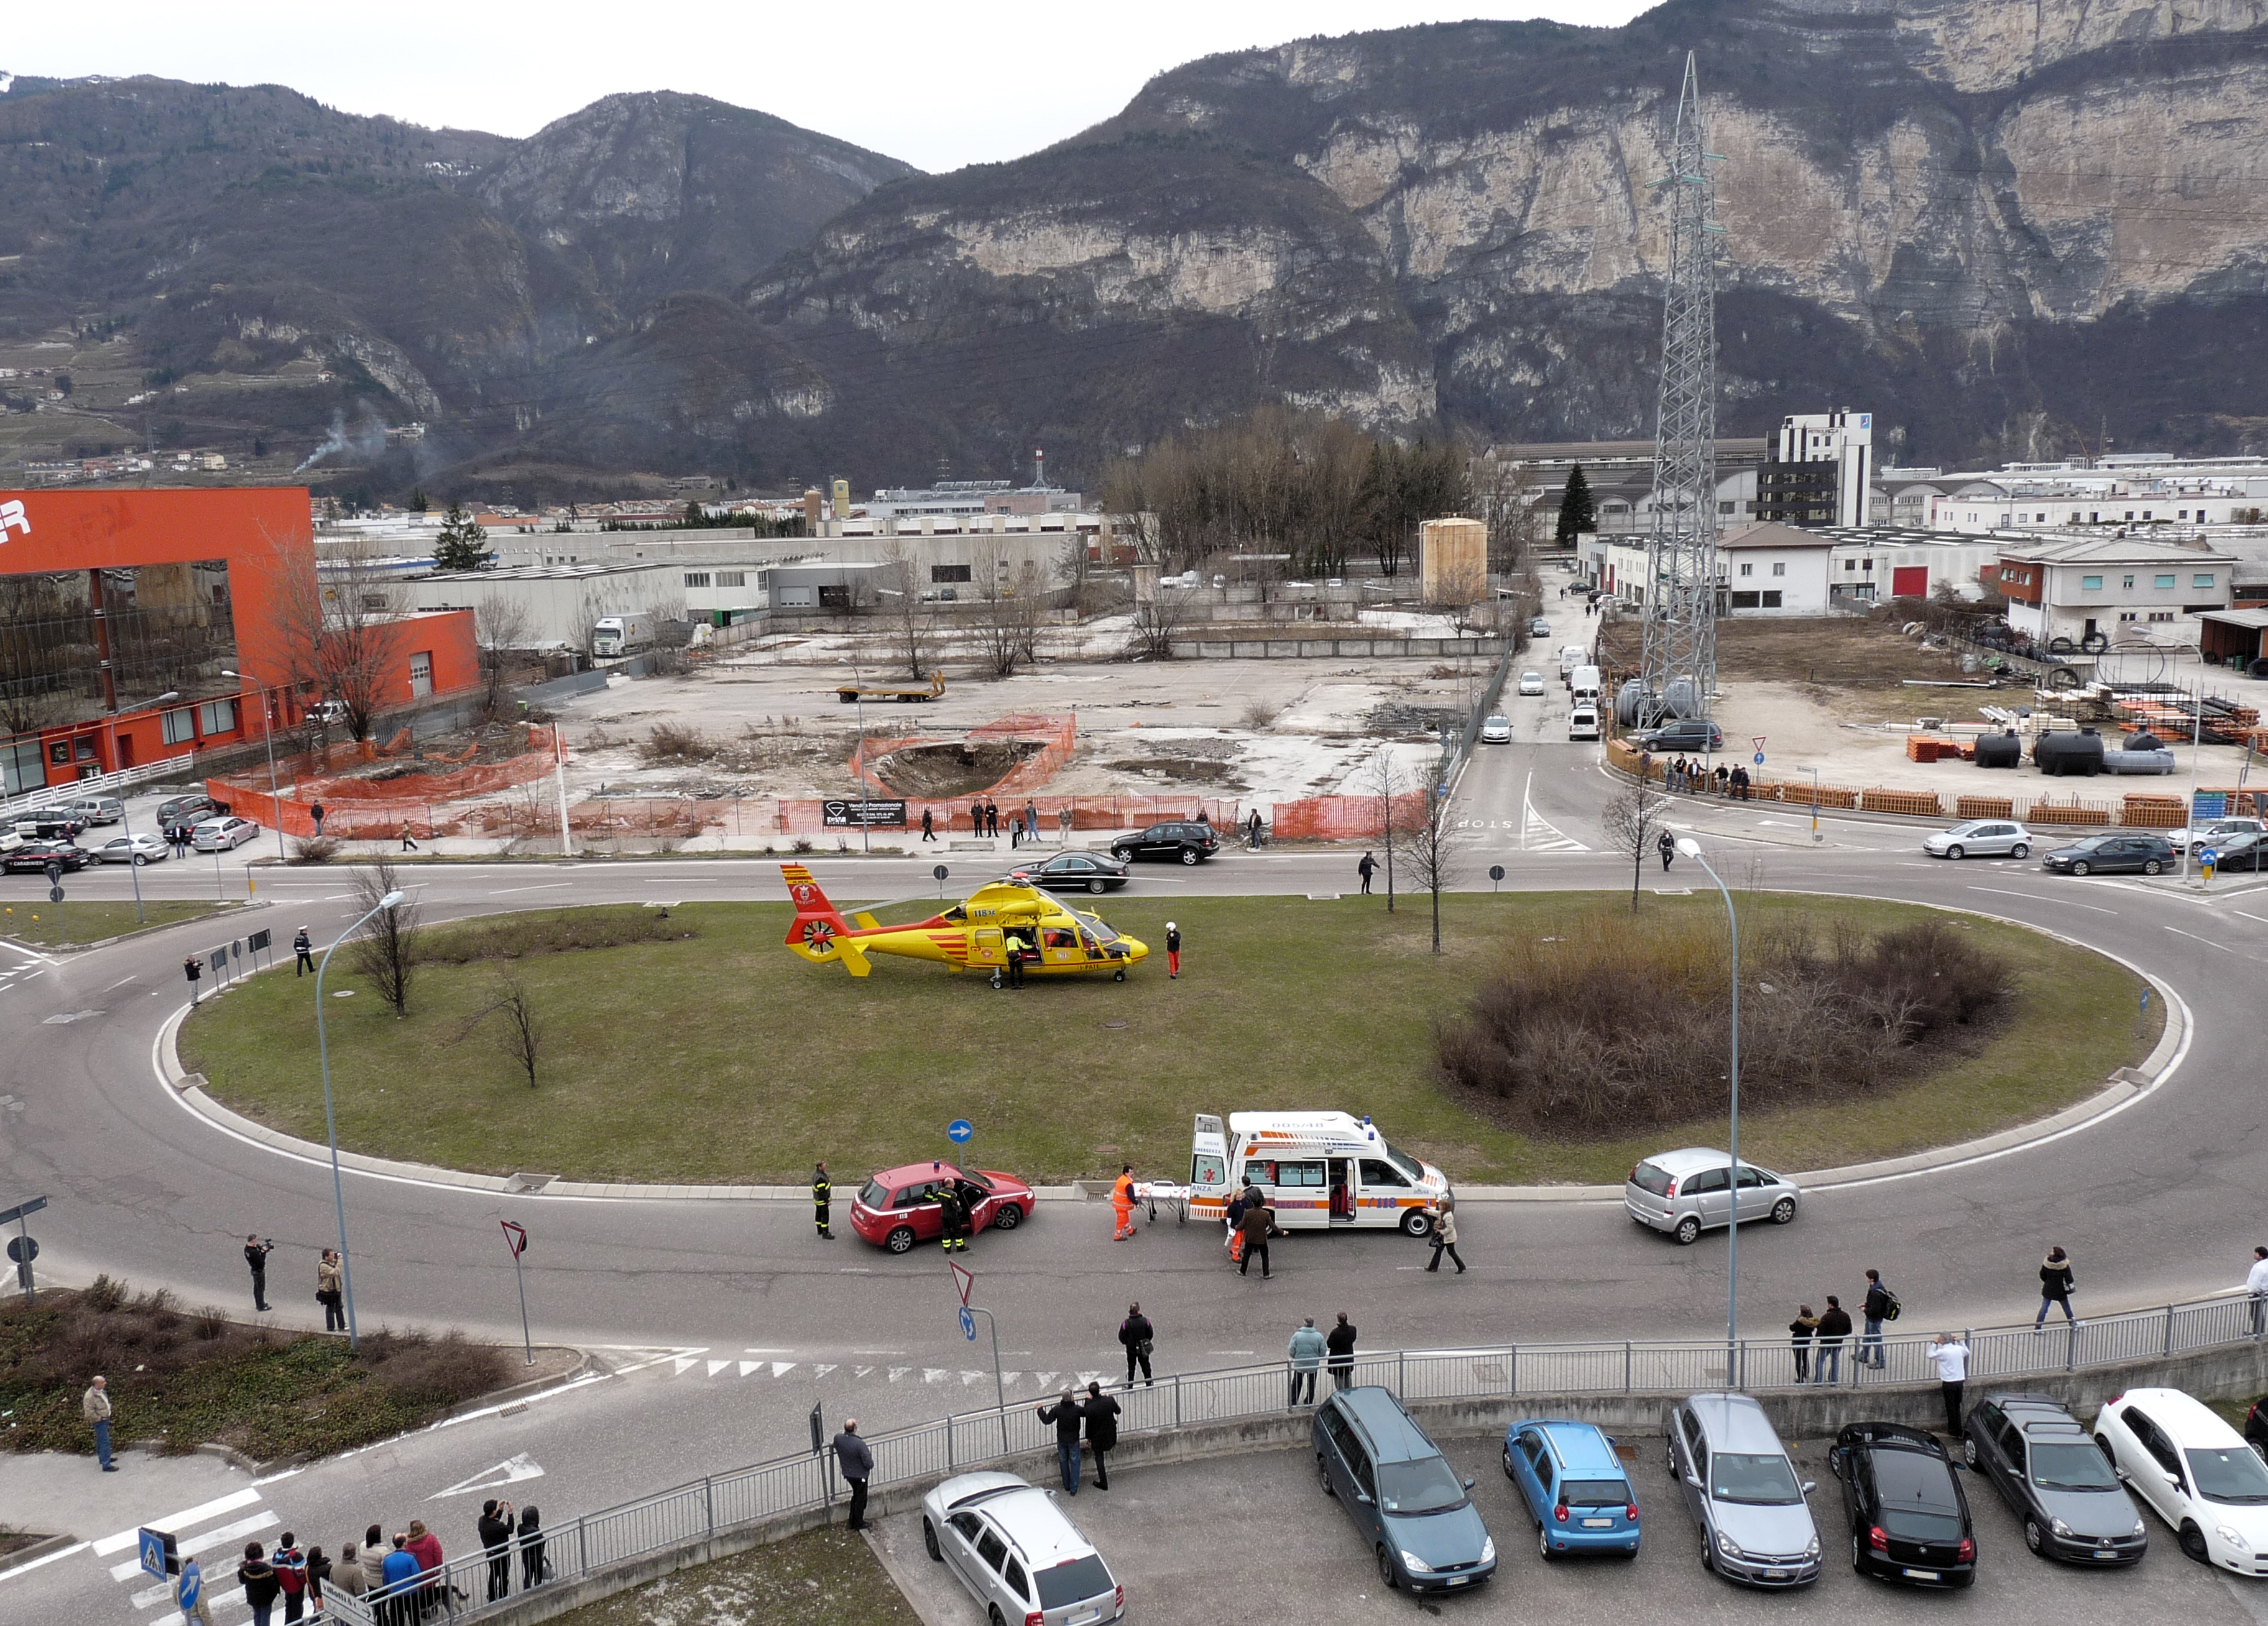 Trento-I-PATE-landing for an emergency on 20090310